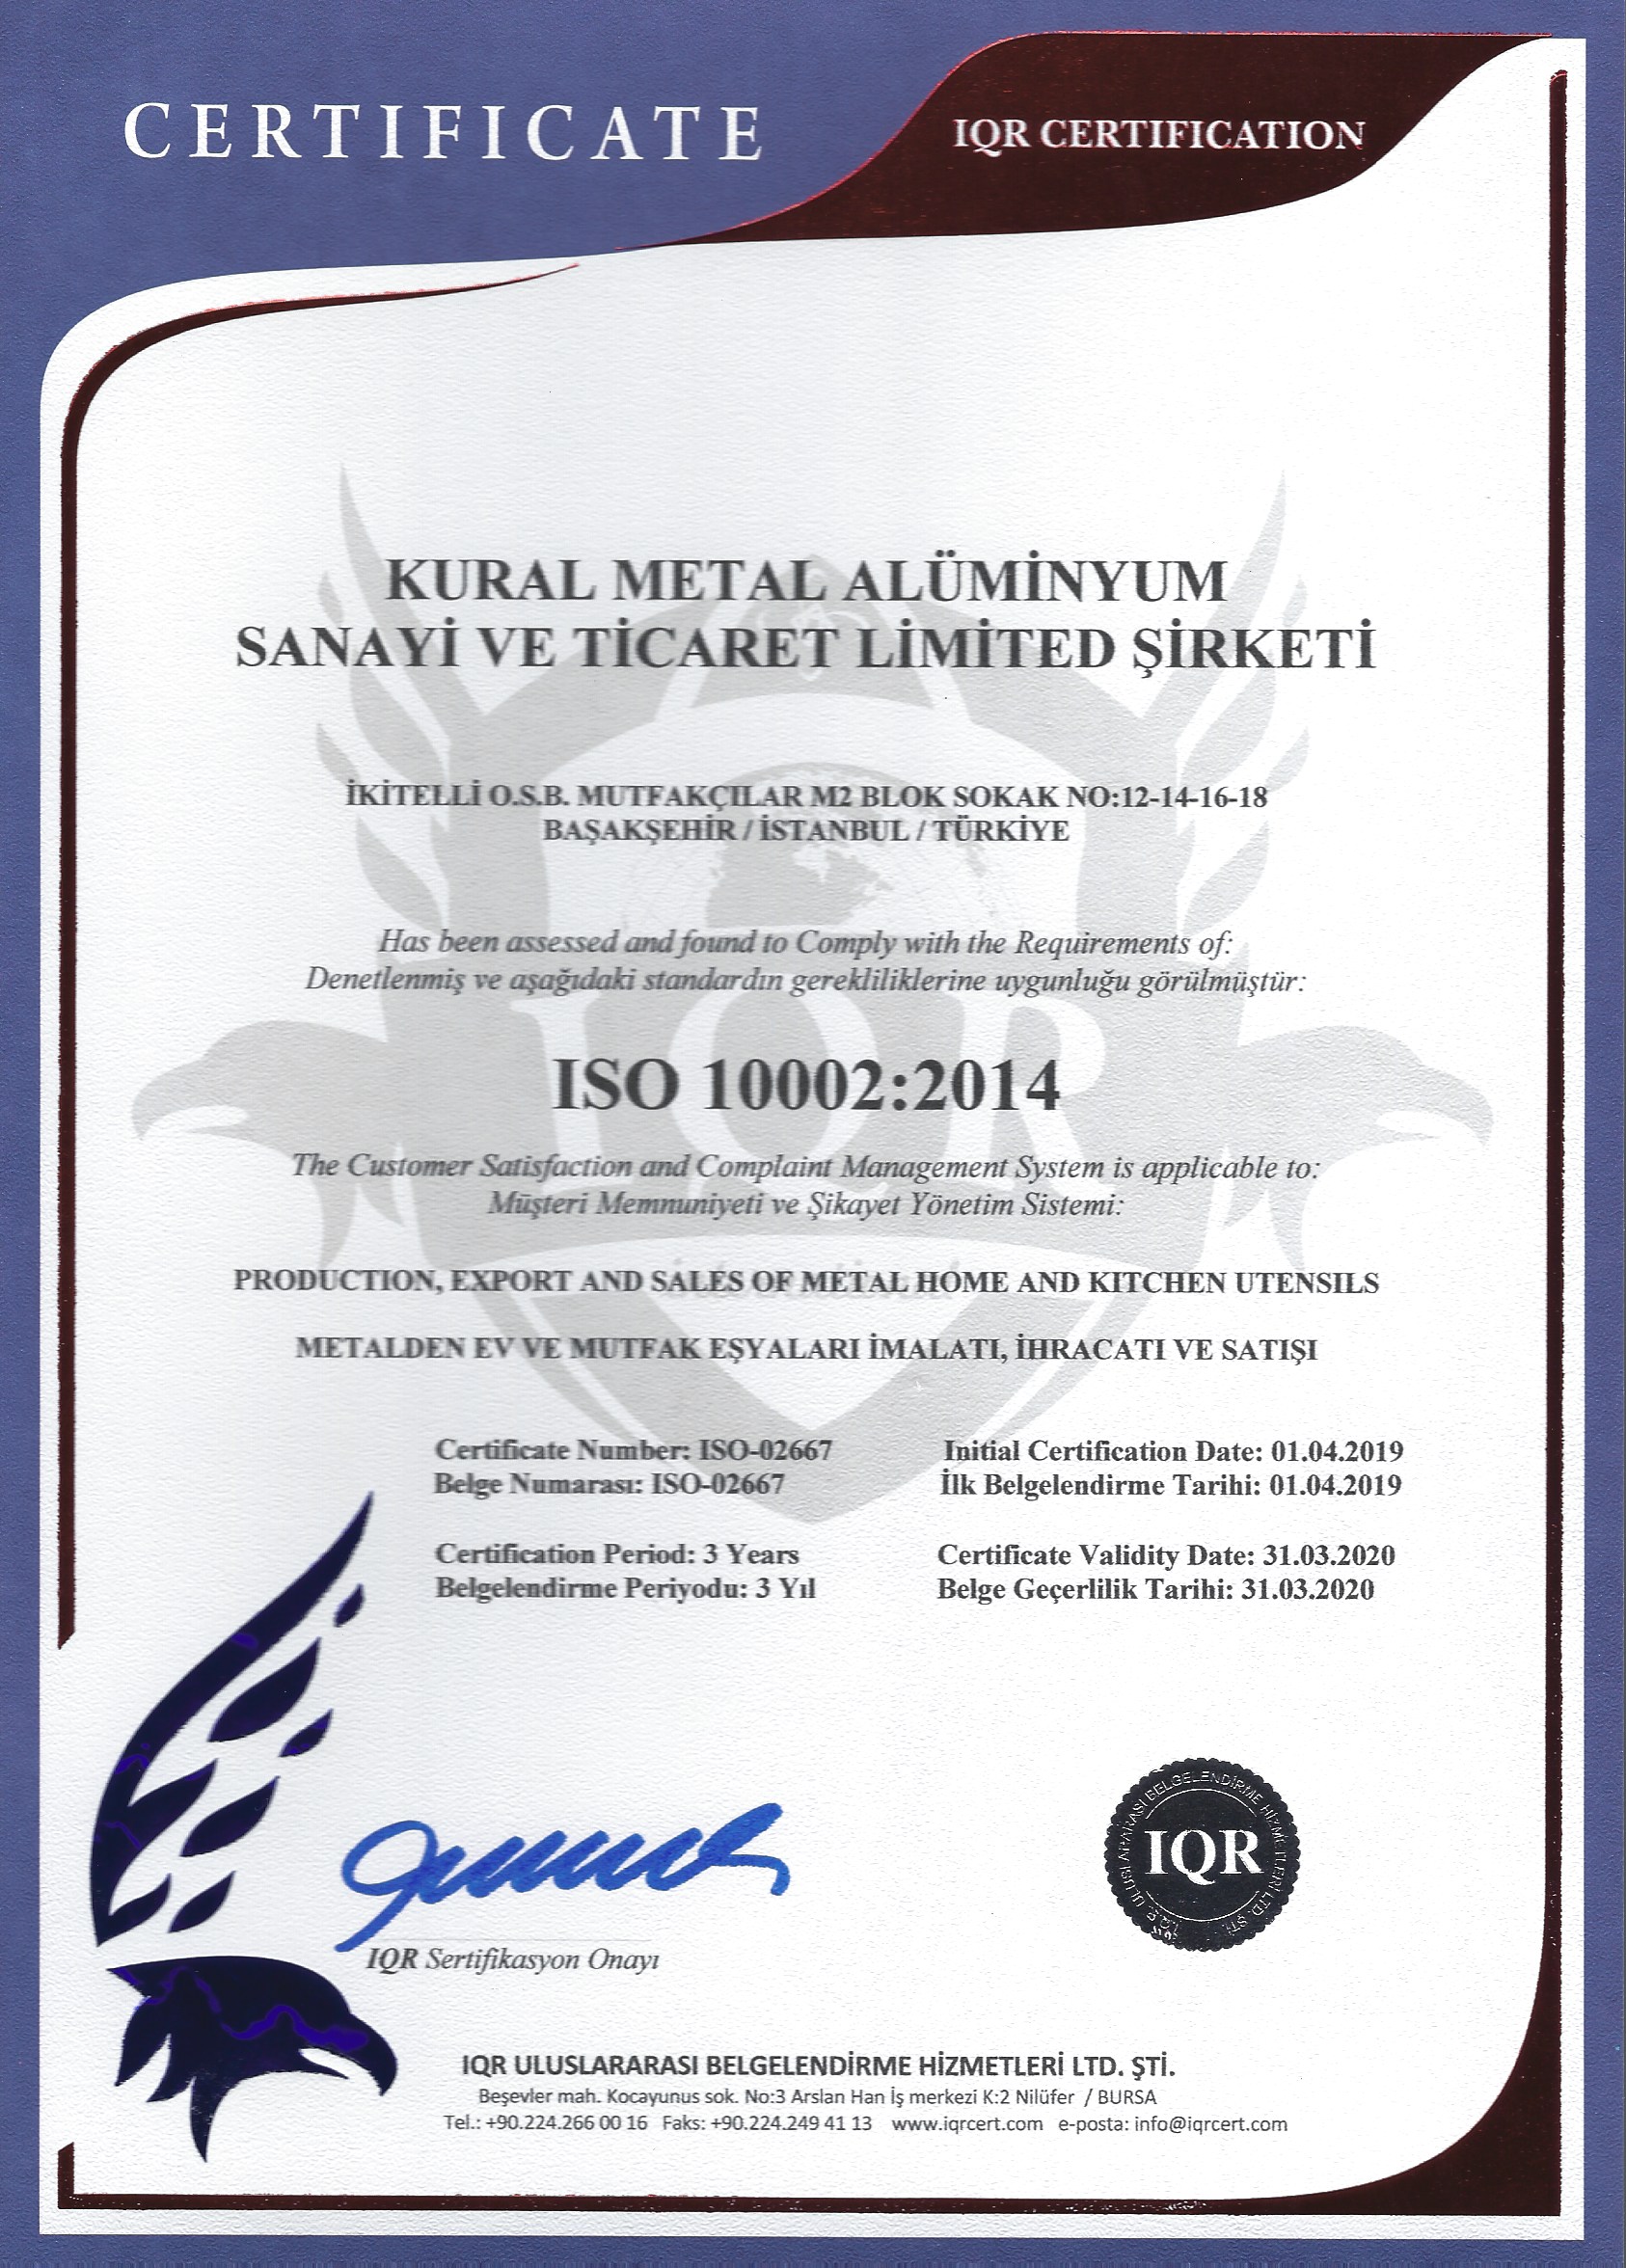 brioni ISO 10002:2014 musteri memnuniyeti ve sikayet yonetimi sertifikasi